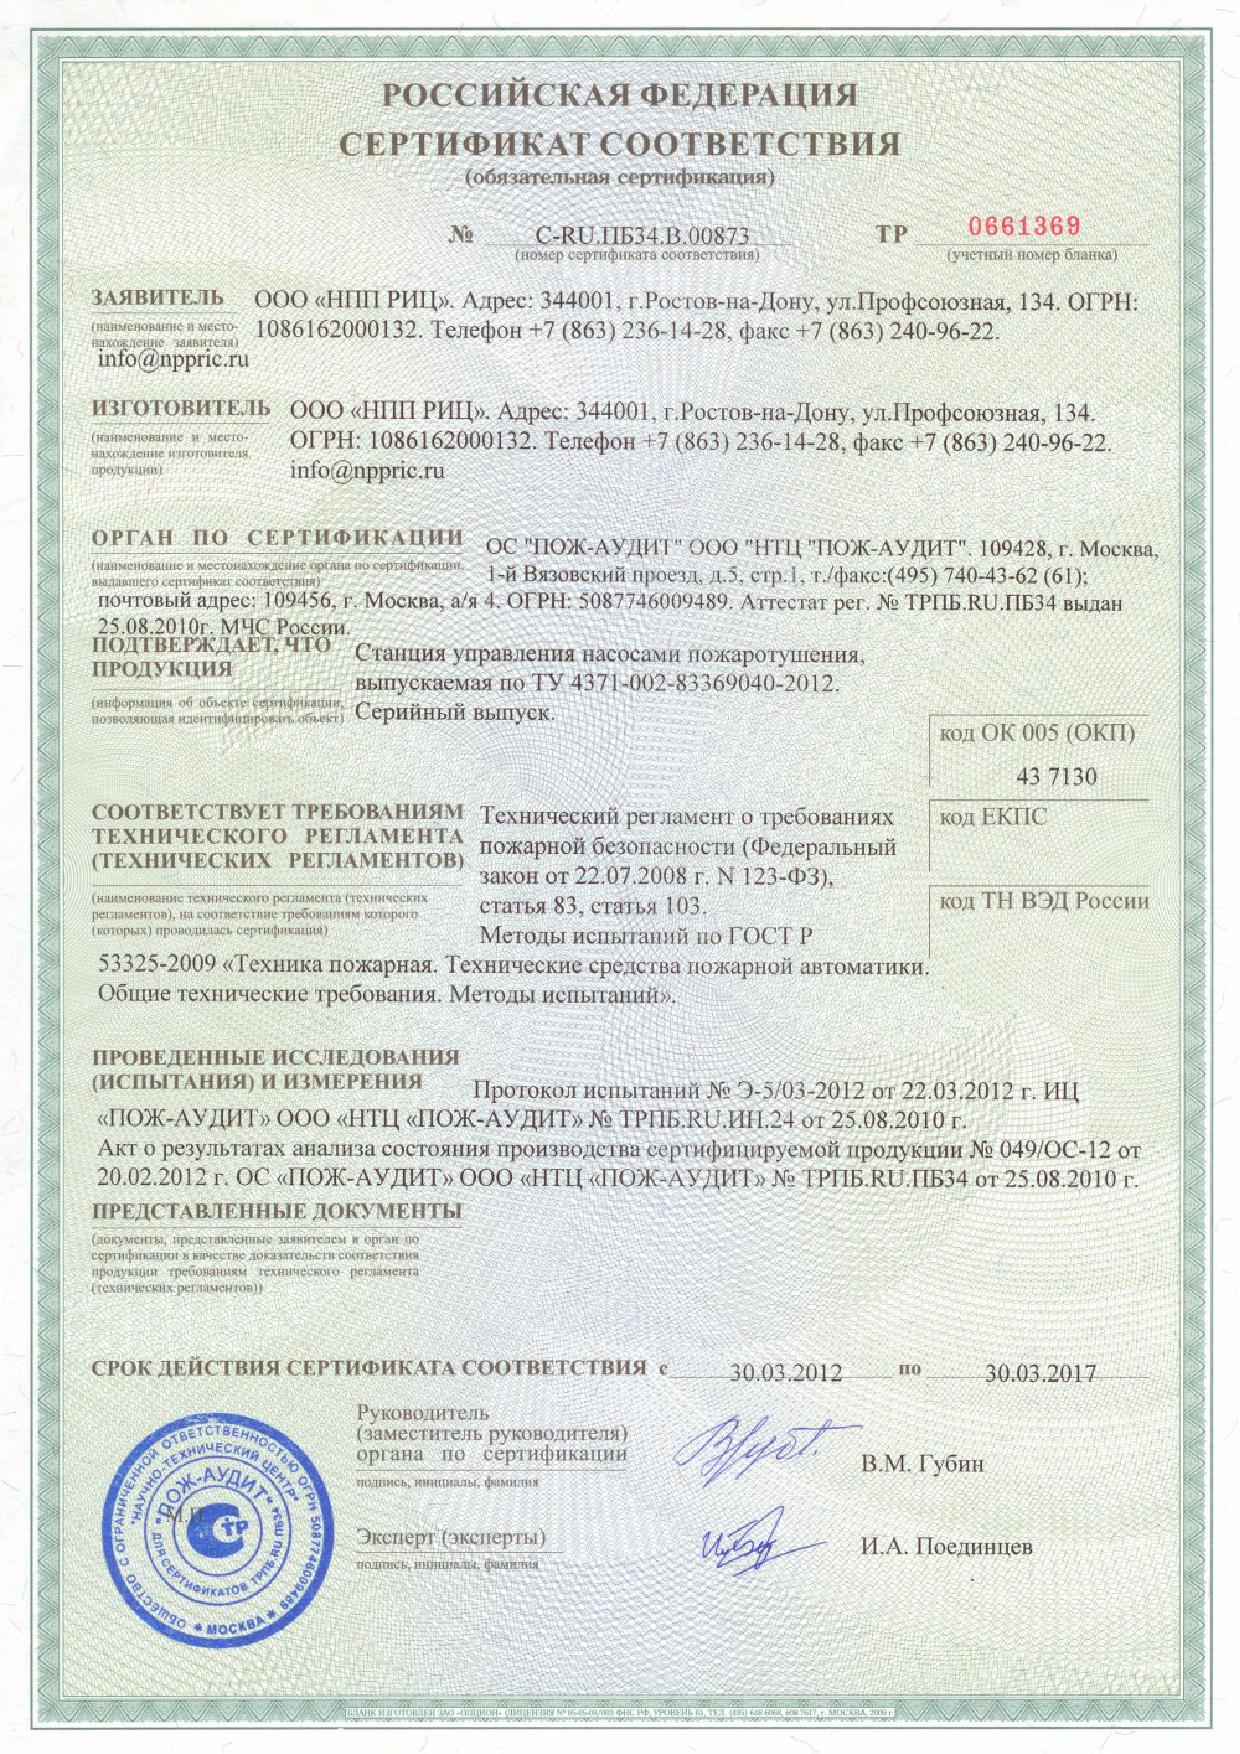 2012-03-30-2017-03-30-certificate-RPF